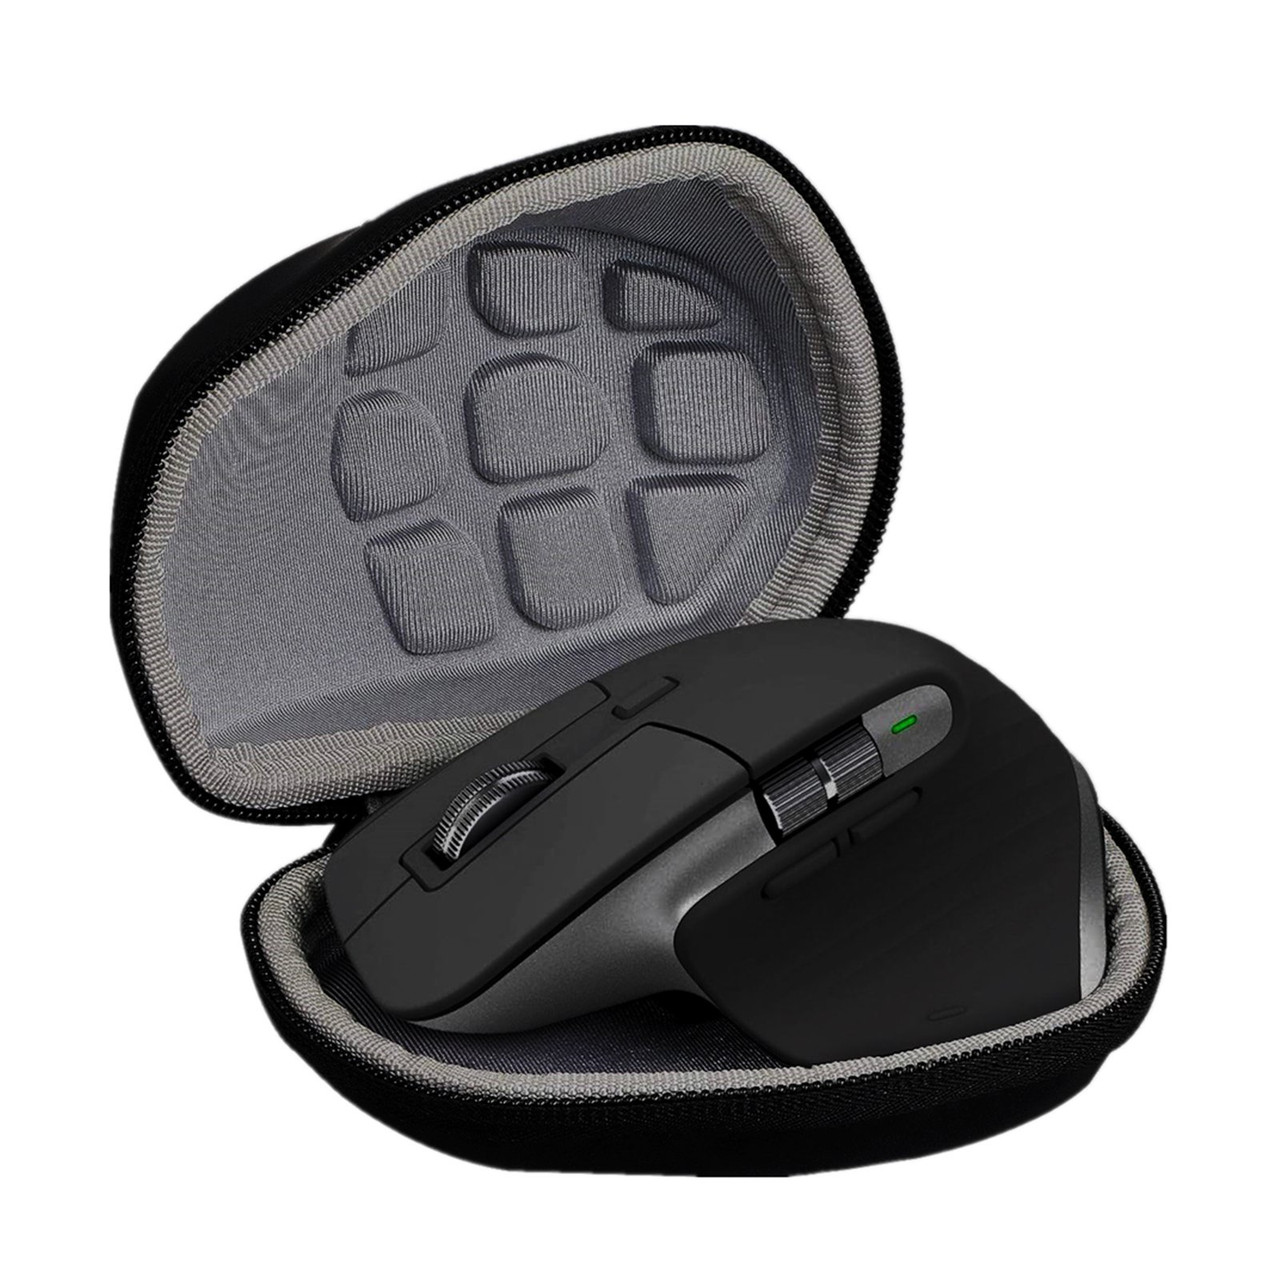 HIABIO Portable Travel Bag for MX Master 3 Gaming Mouse EVA